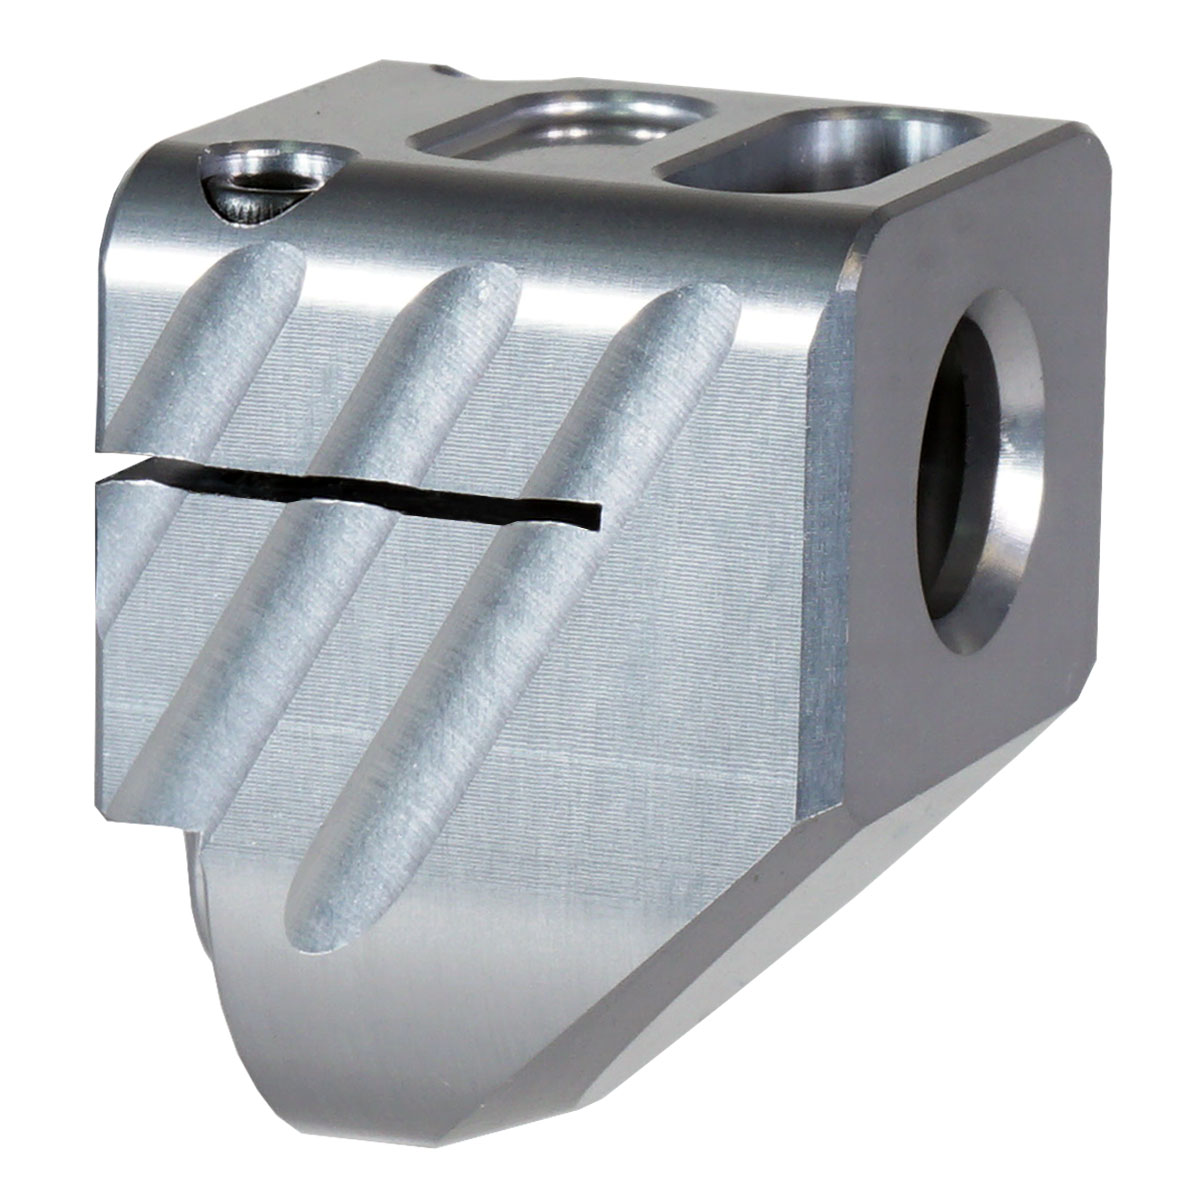 *BLEM* Mercury Precision Glock Compatible Compensator 6061 Aluminum, Anodized Type 2 Gray Single port comp, 1/2x28 with clamping set screws - BLEM